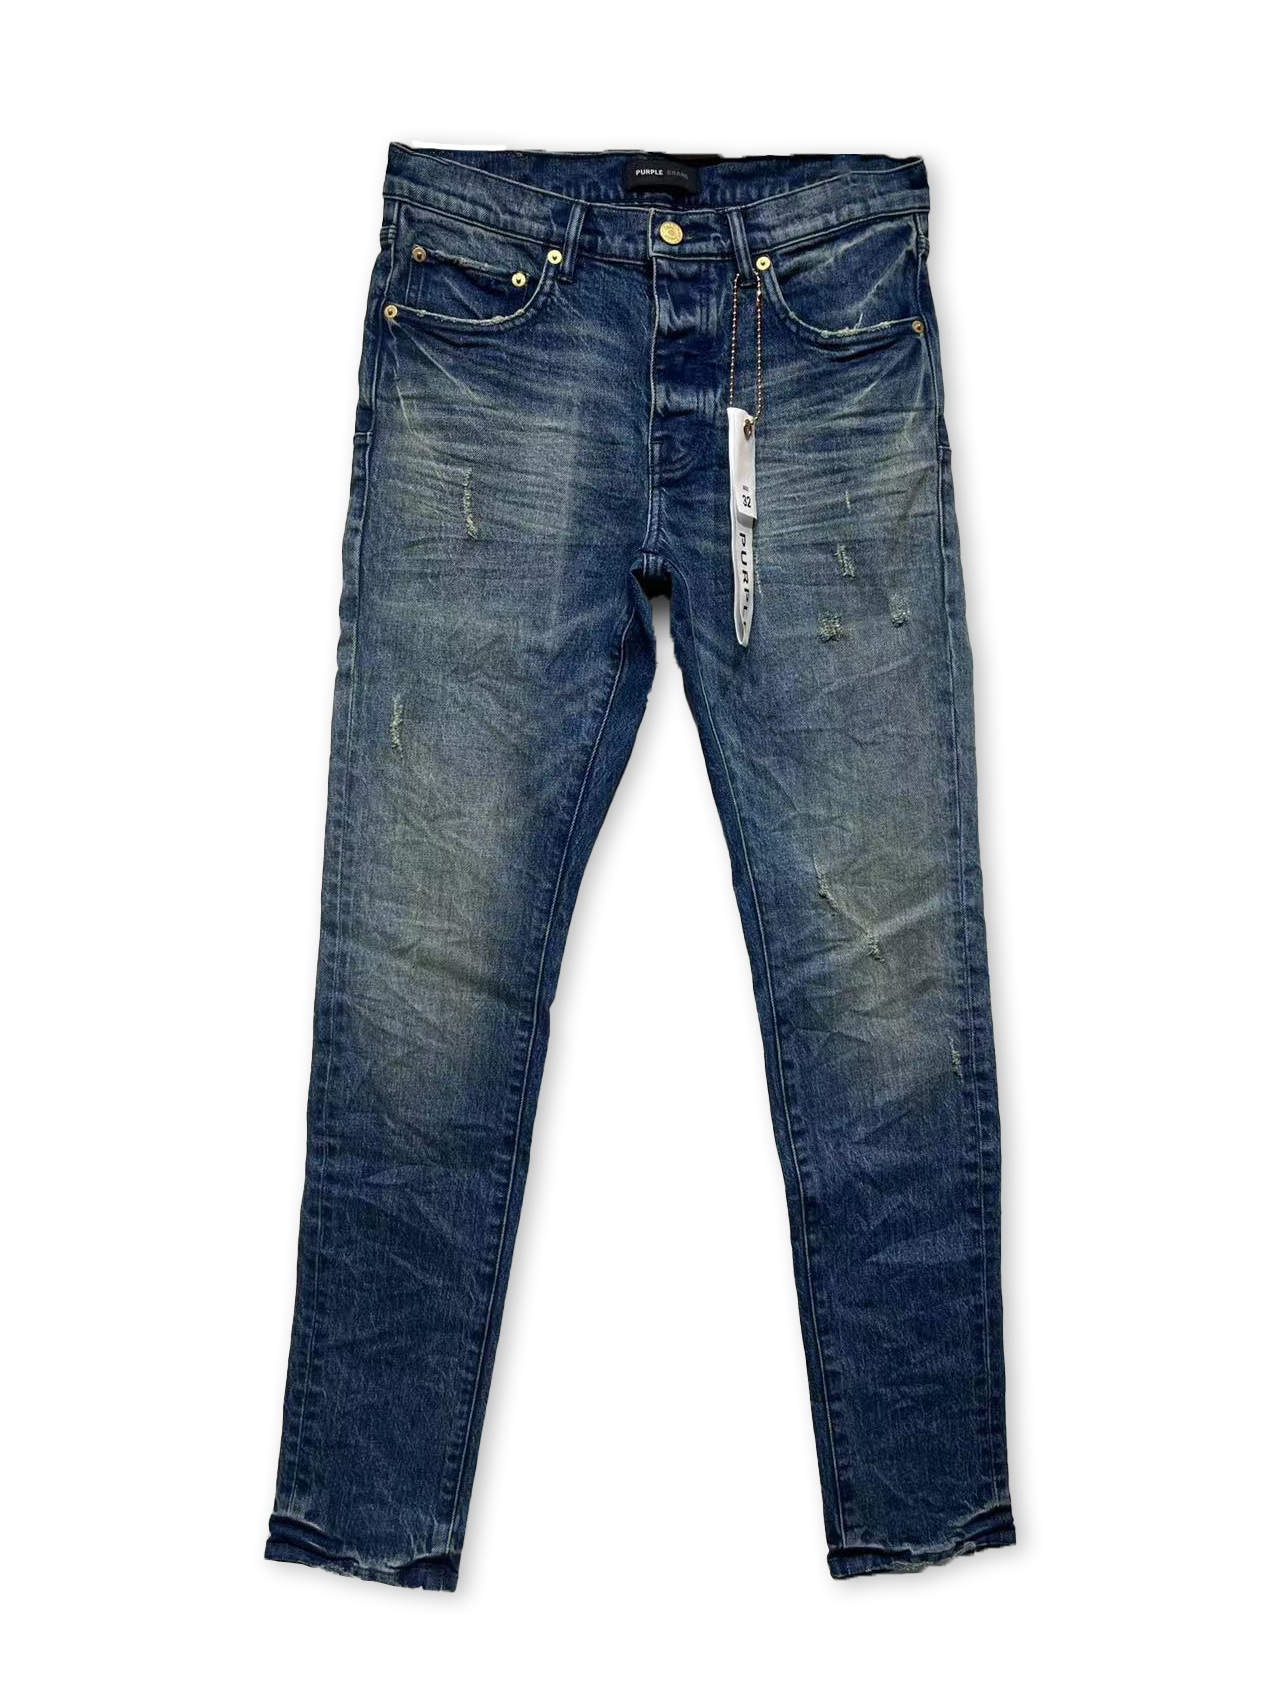 Purple Brand Vintage Slate Jeans - GREY - Civilized Nation - Official Site